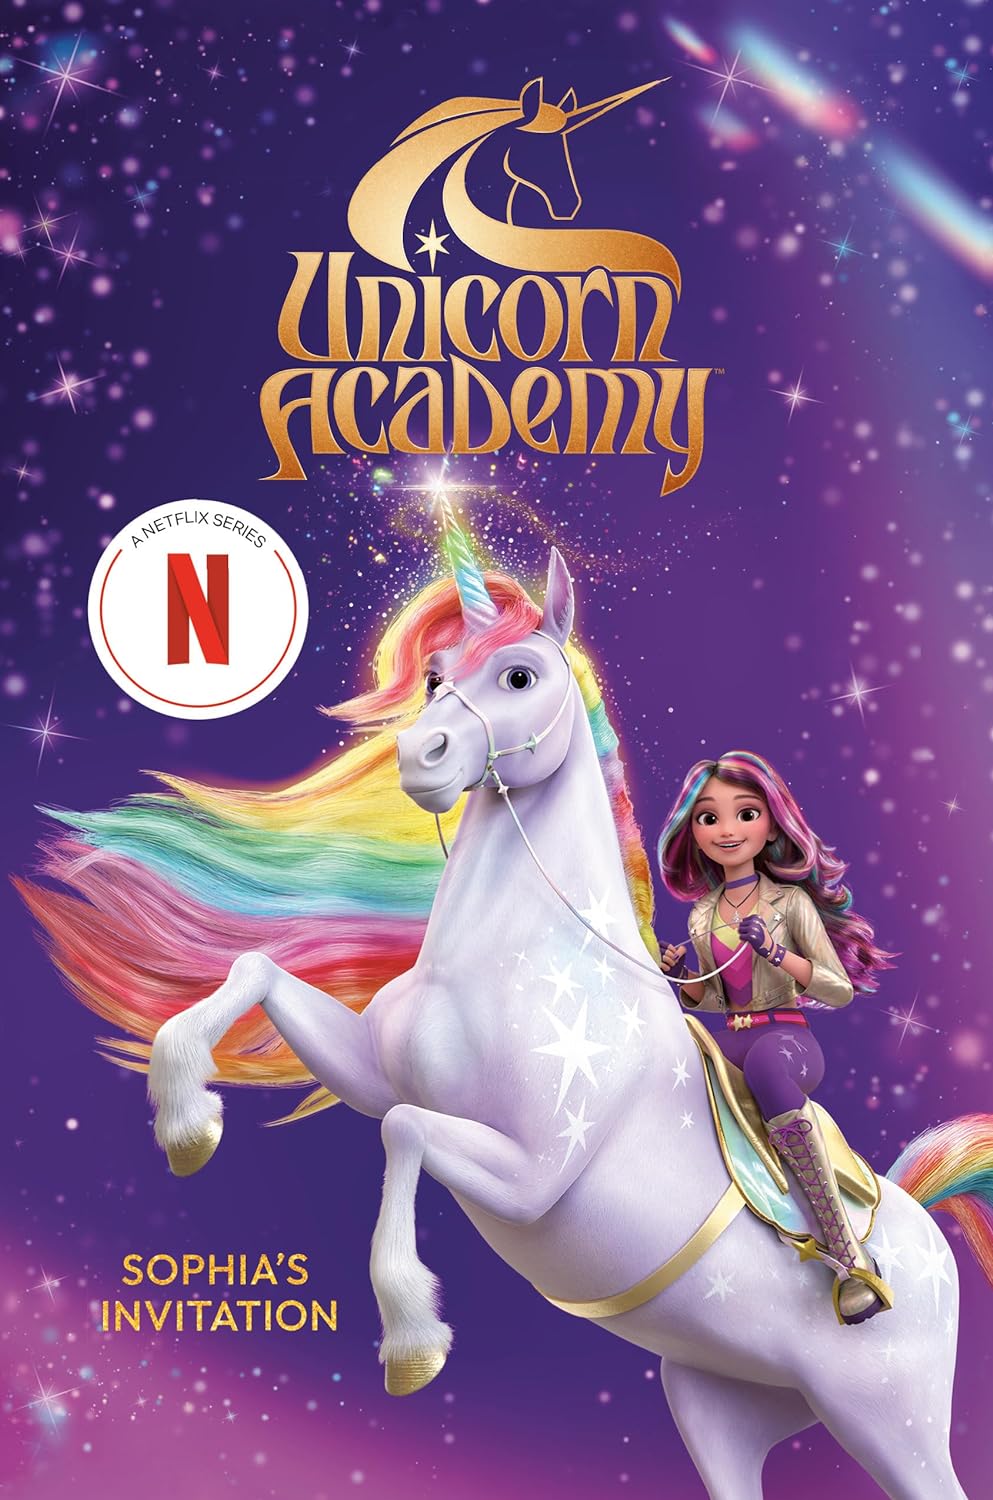 Unicorn Girls - new dolls and animated series form Headstart toys